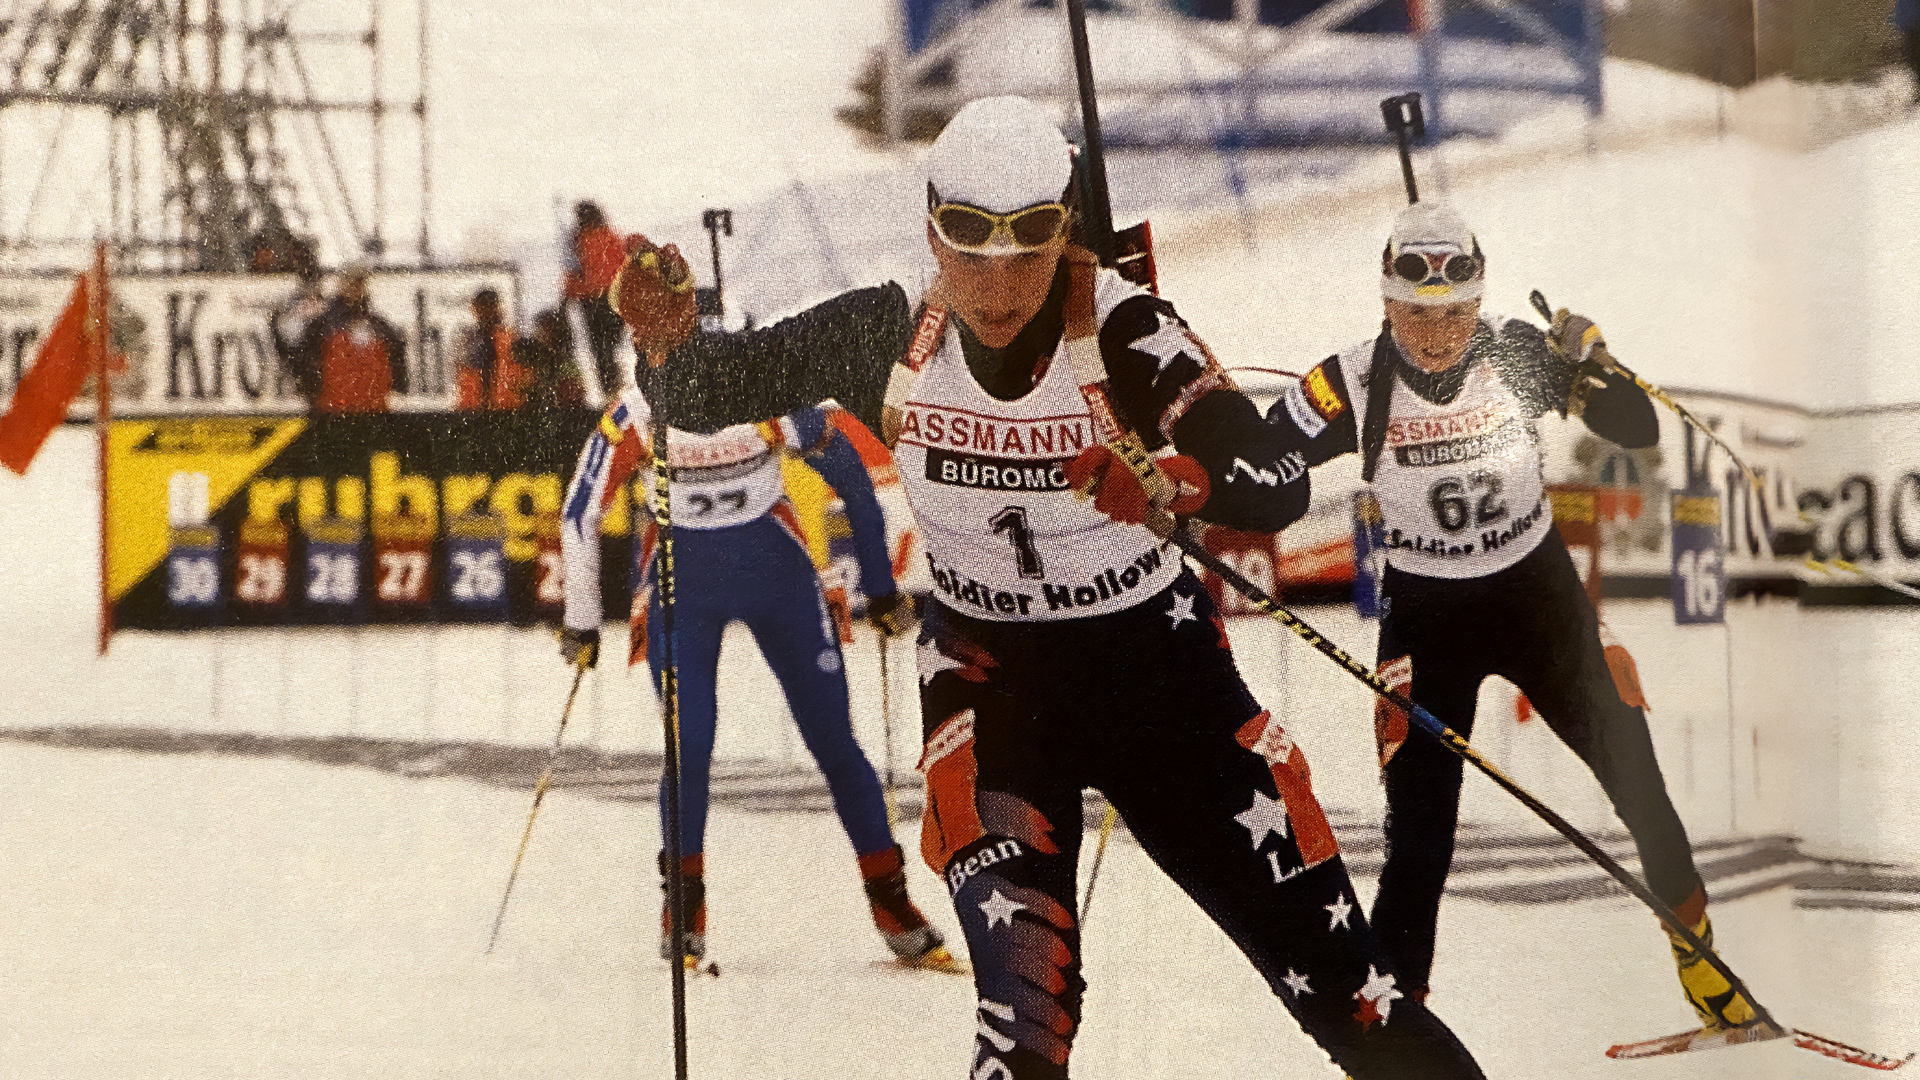 Classic SSUSA 2001 IBU Biathlon World Cup Previews Salt Lake City 2002 Winter Olympics An NRA Shooting Sports Journal